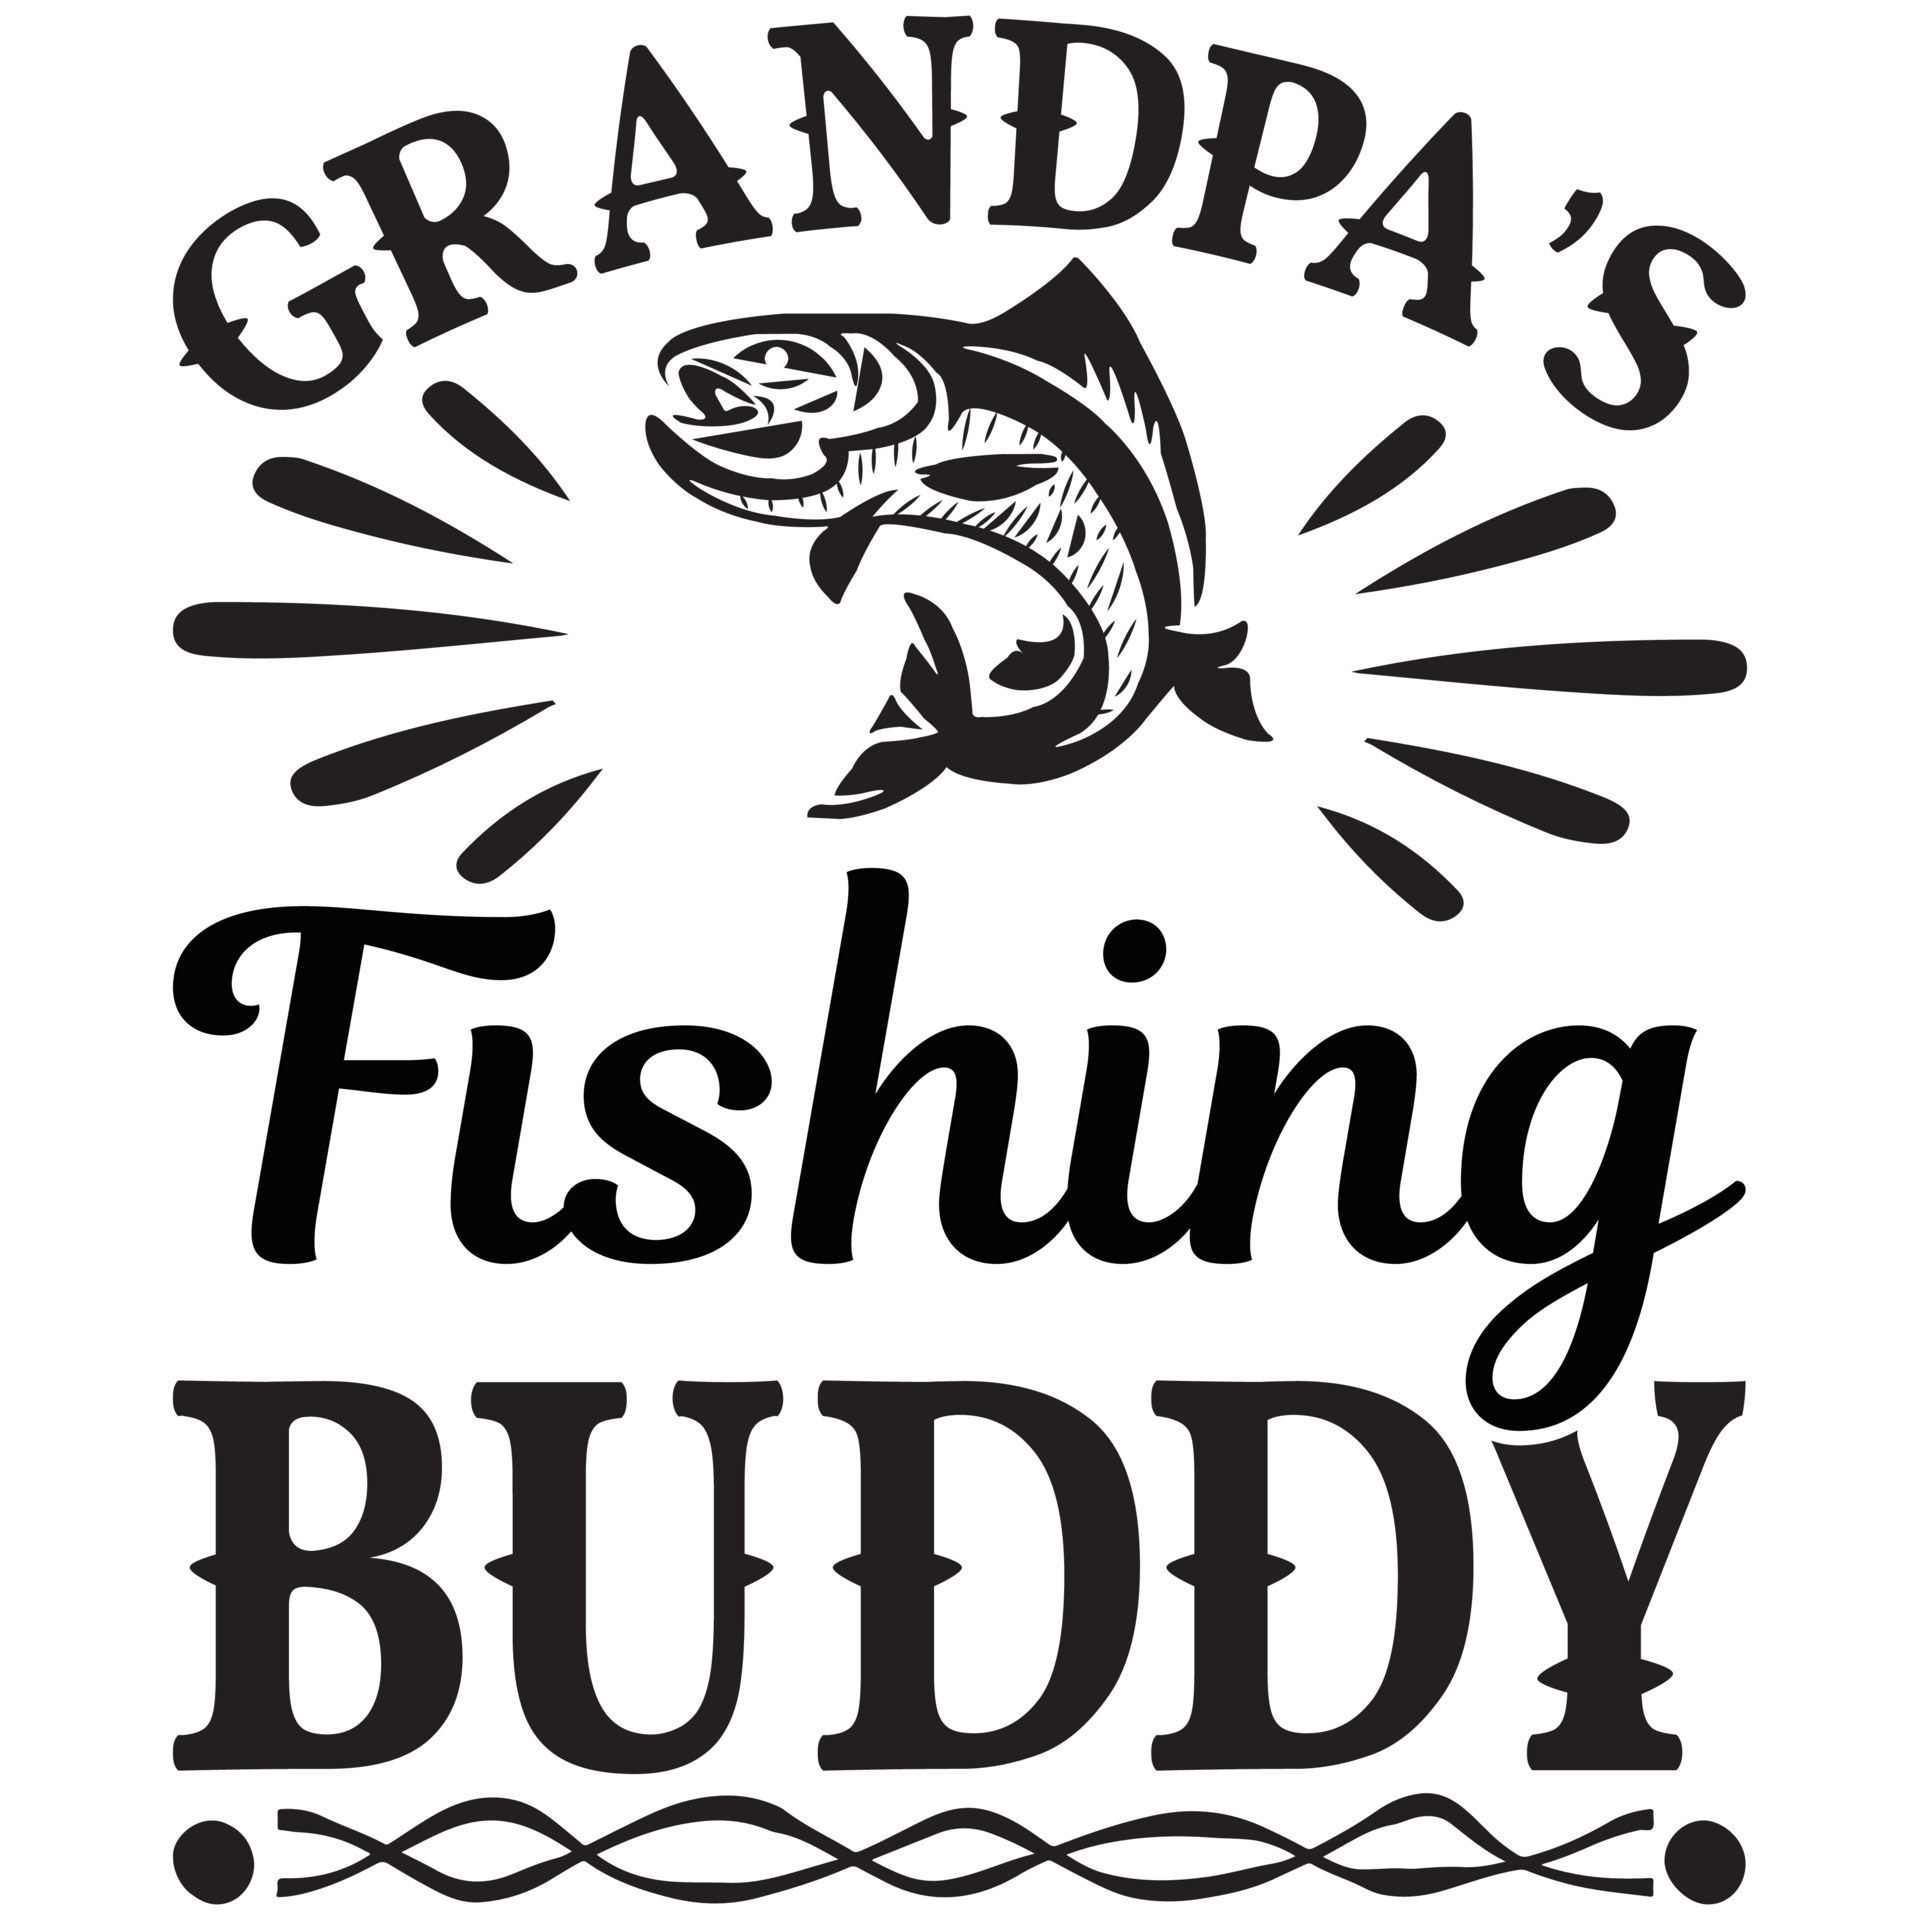 https://static.vecteezy.com/system/resources/previews/014/836/859/original/grandpa-s-fishing-buddy-vector.jpg